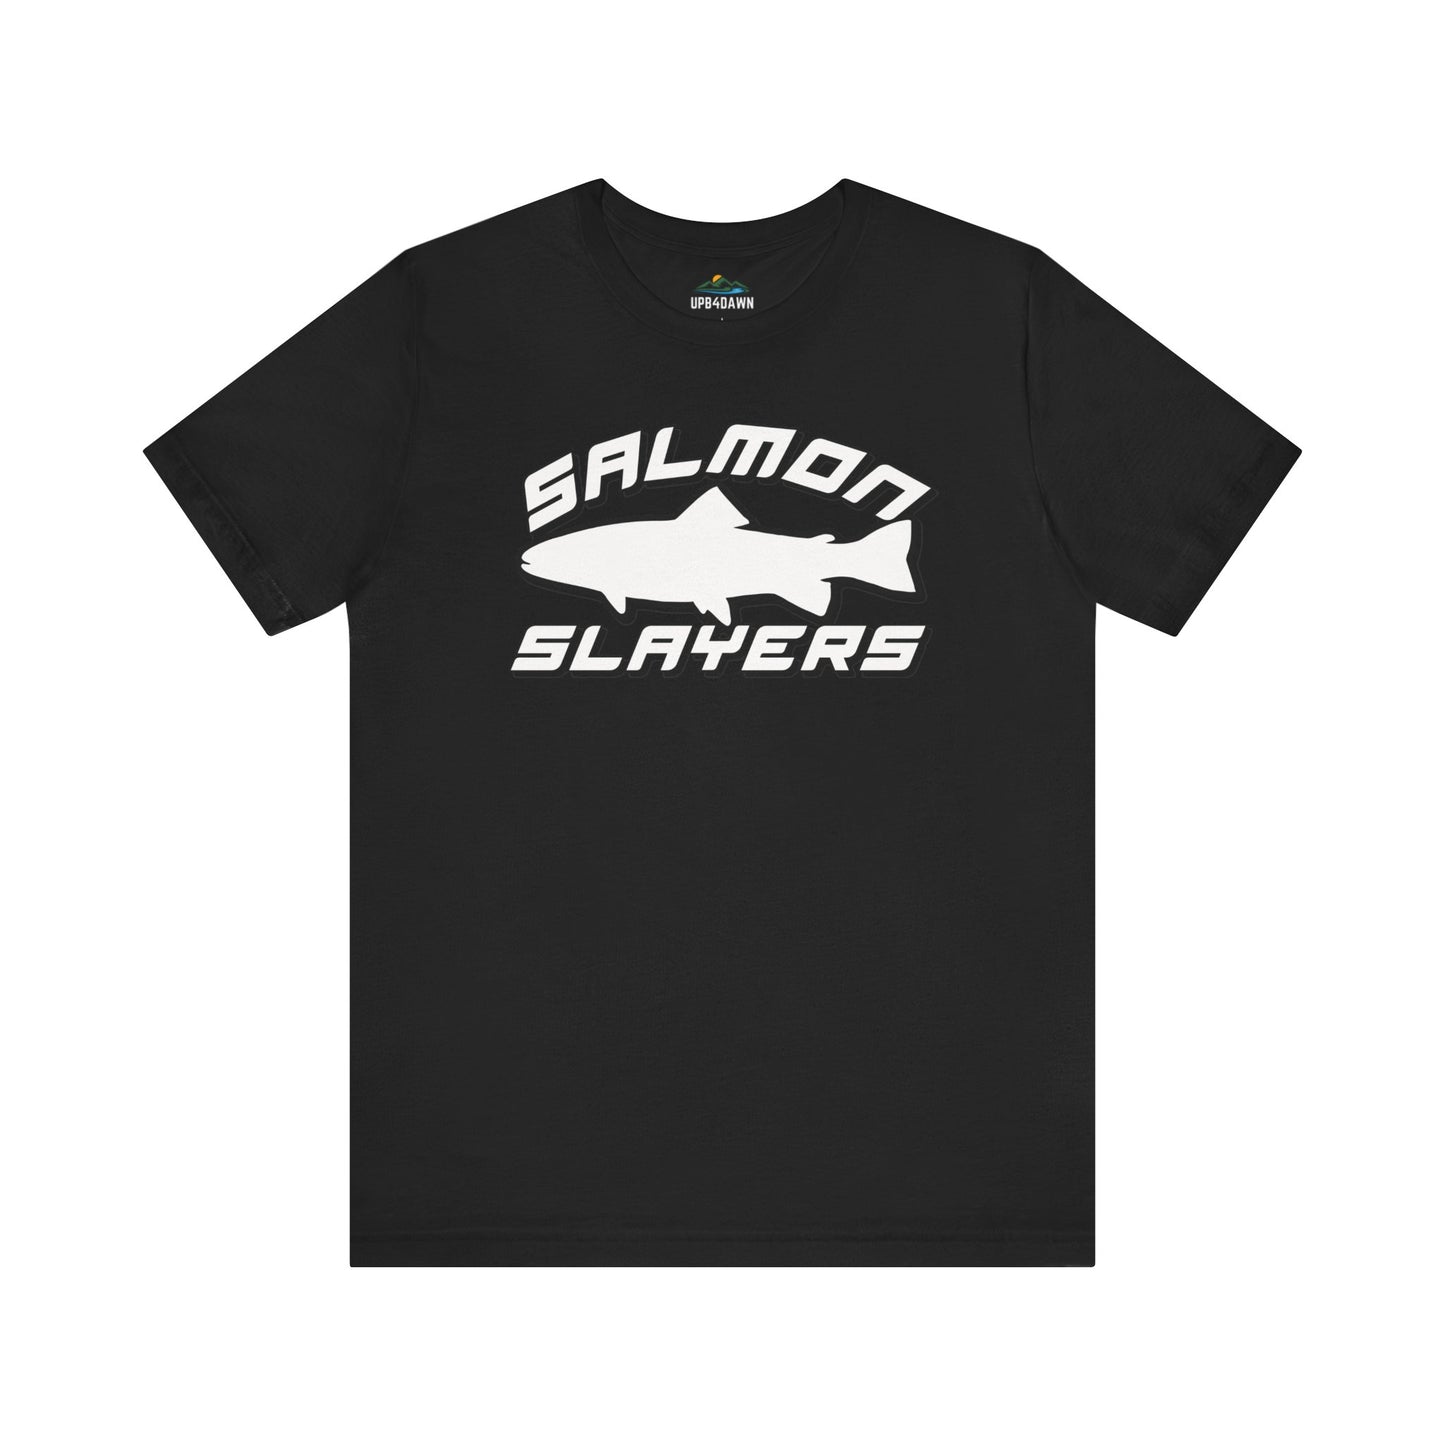 Slamon Slayers - Sport - T-Shirt